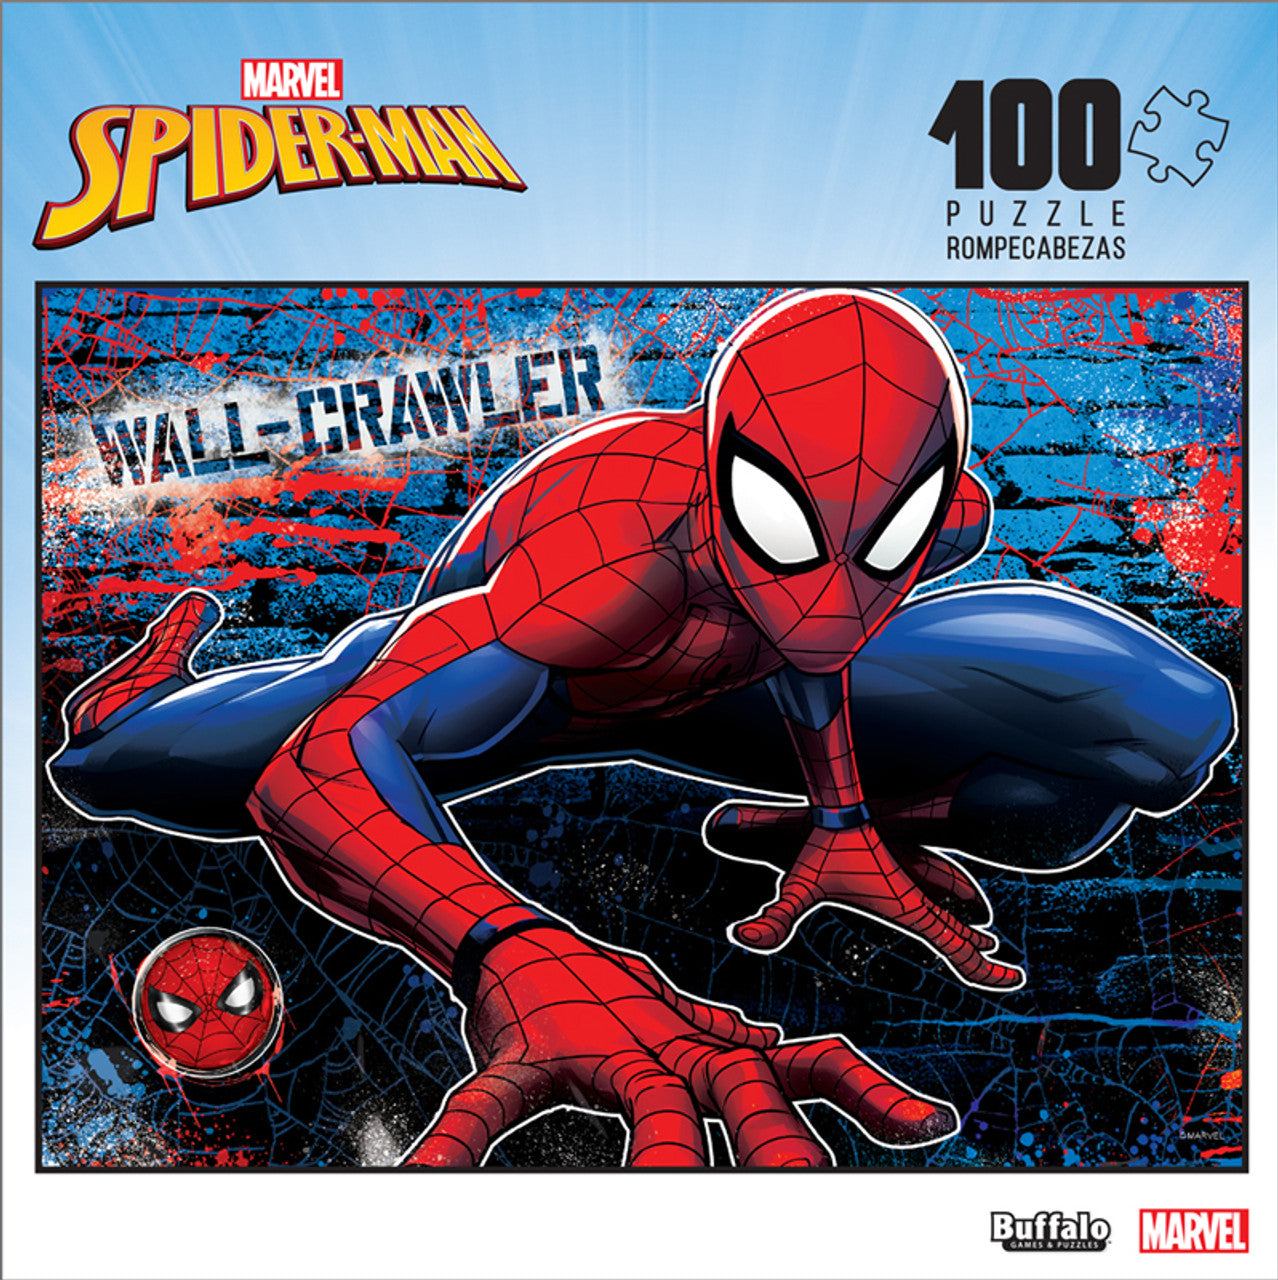 Marvel Super Hero Adventures 48pc Jigsaw Puzzle NEW